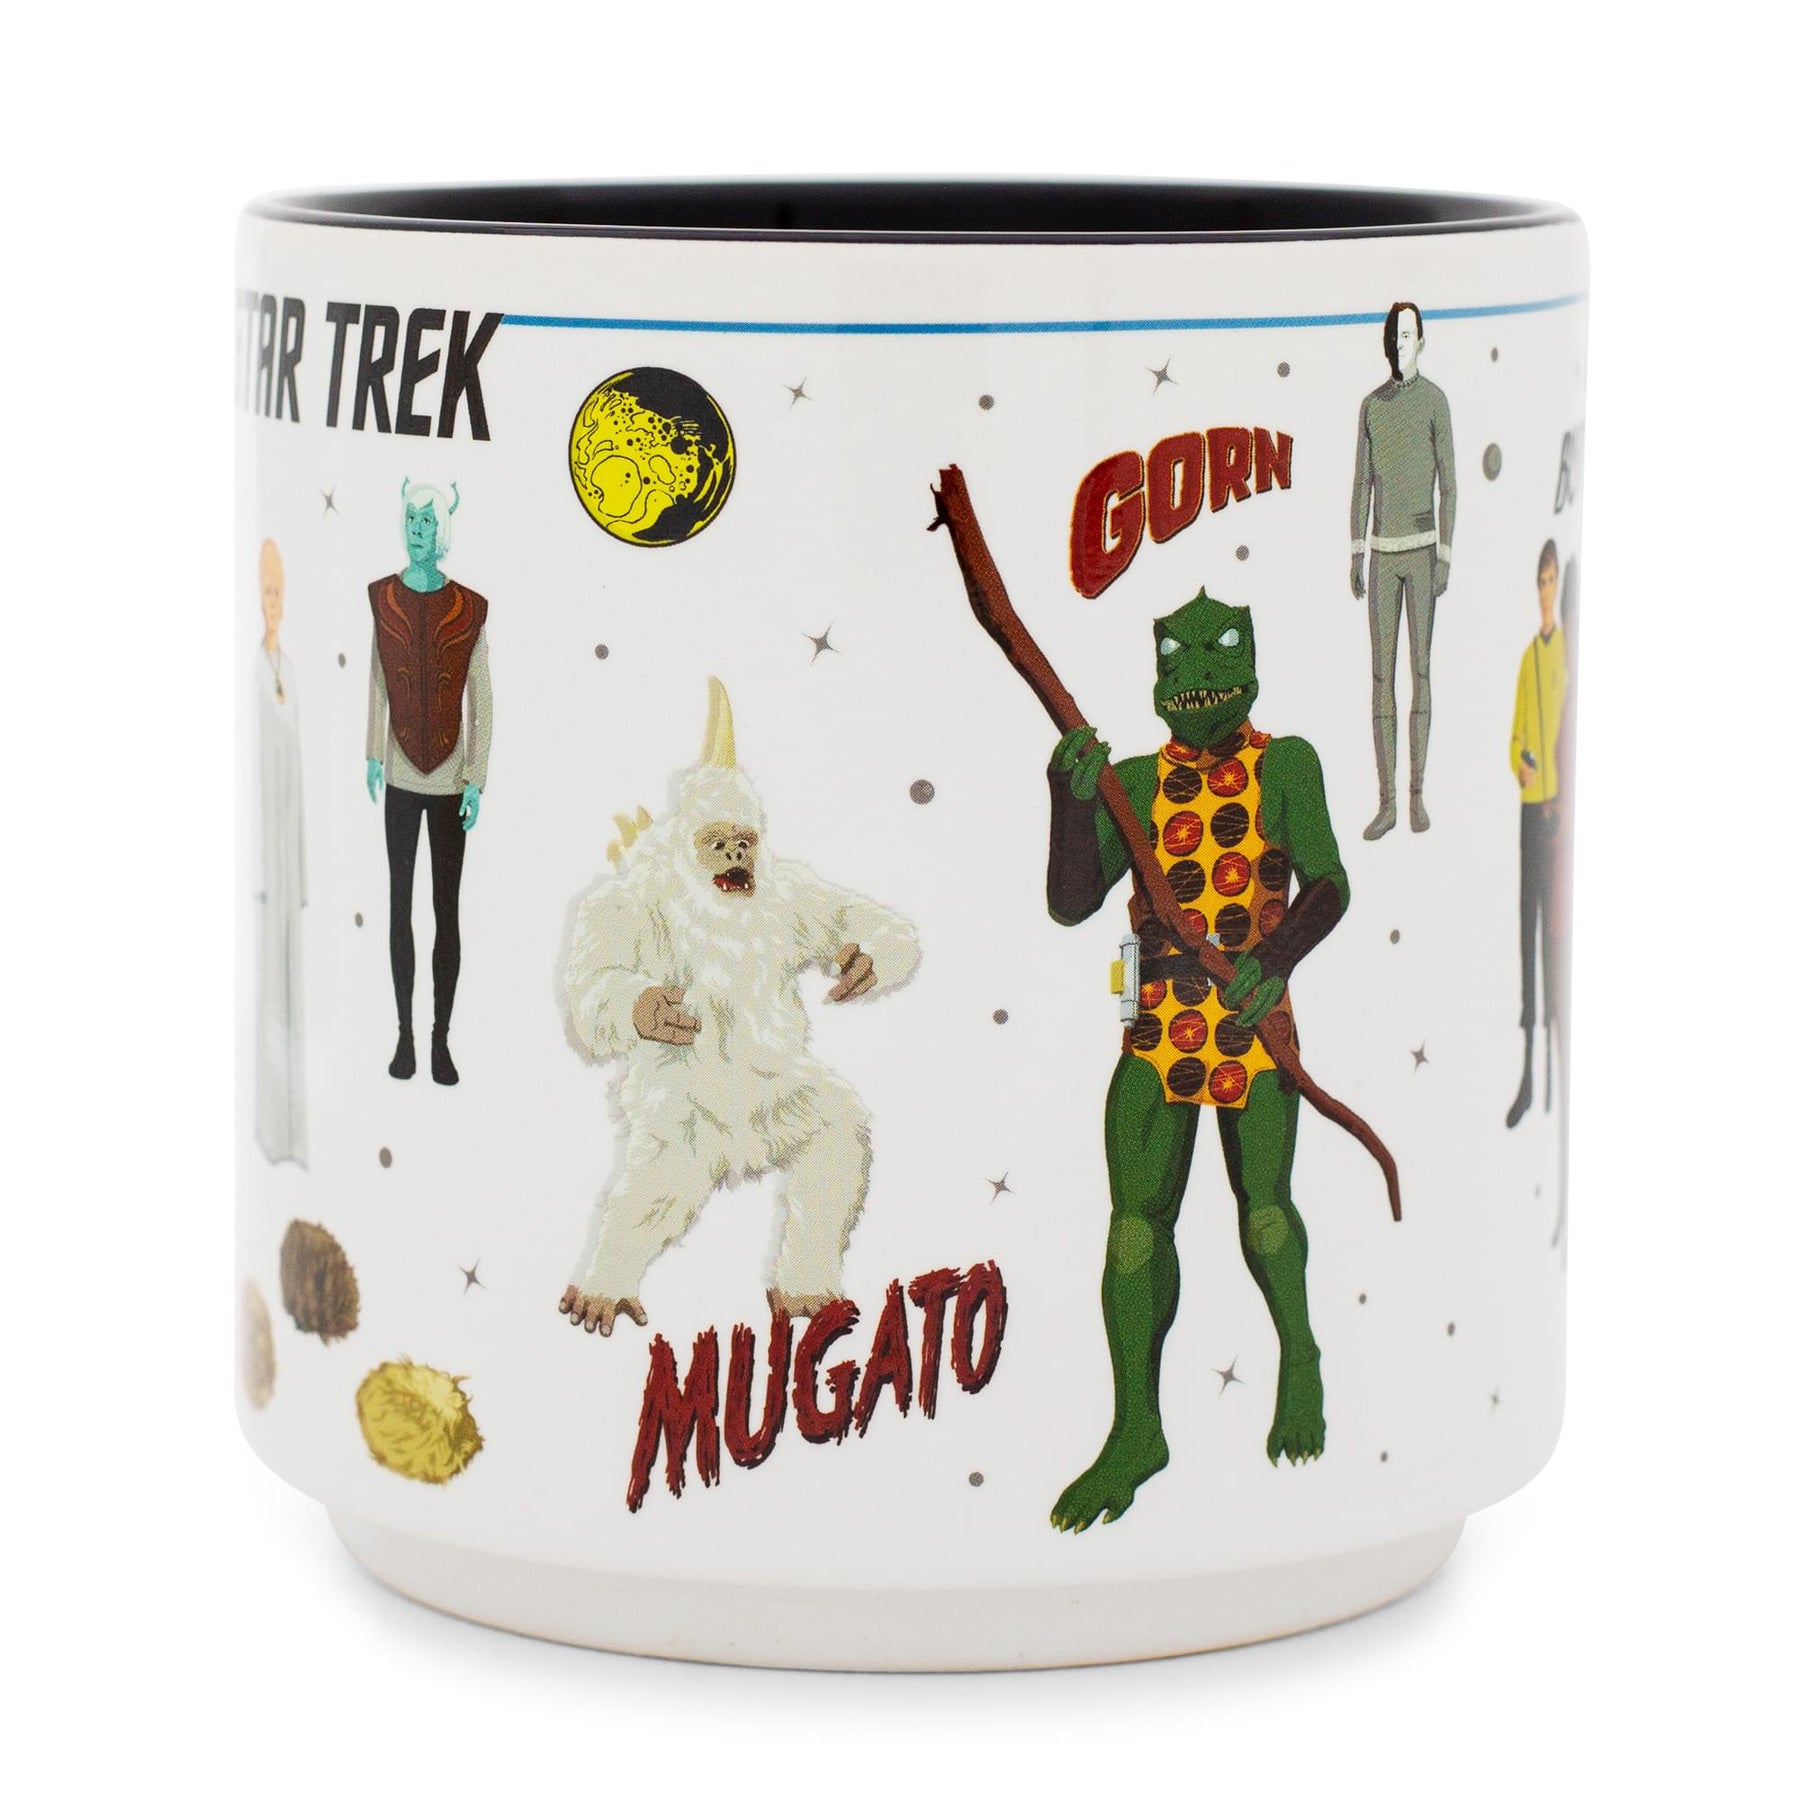 Star Trek Aliens, Villains, and Crew Stackable Ceramic Mug | Holds 13 Ounces